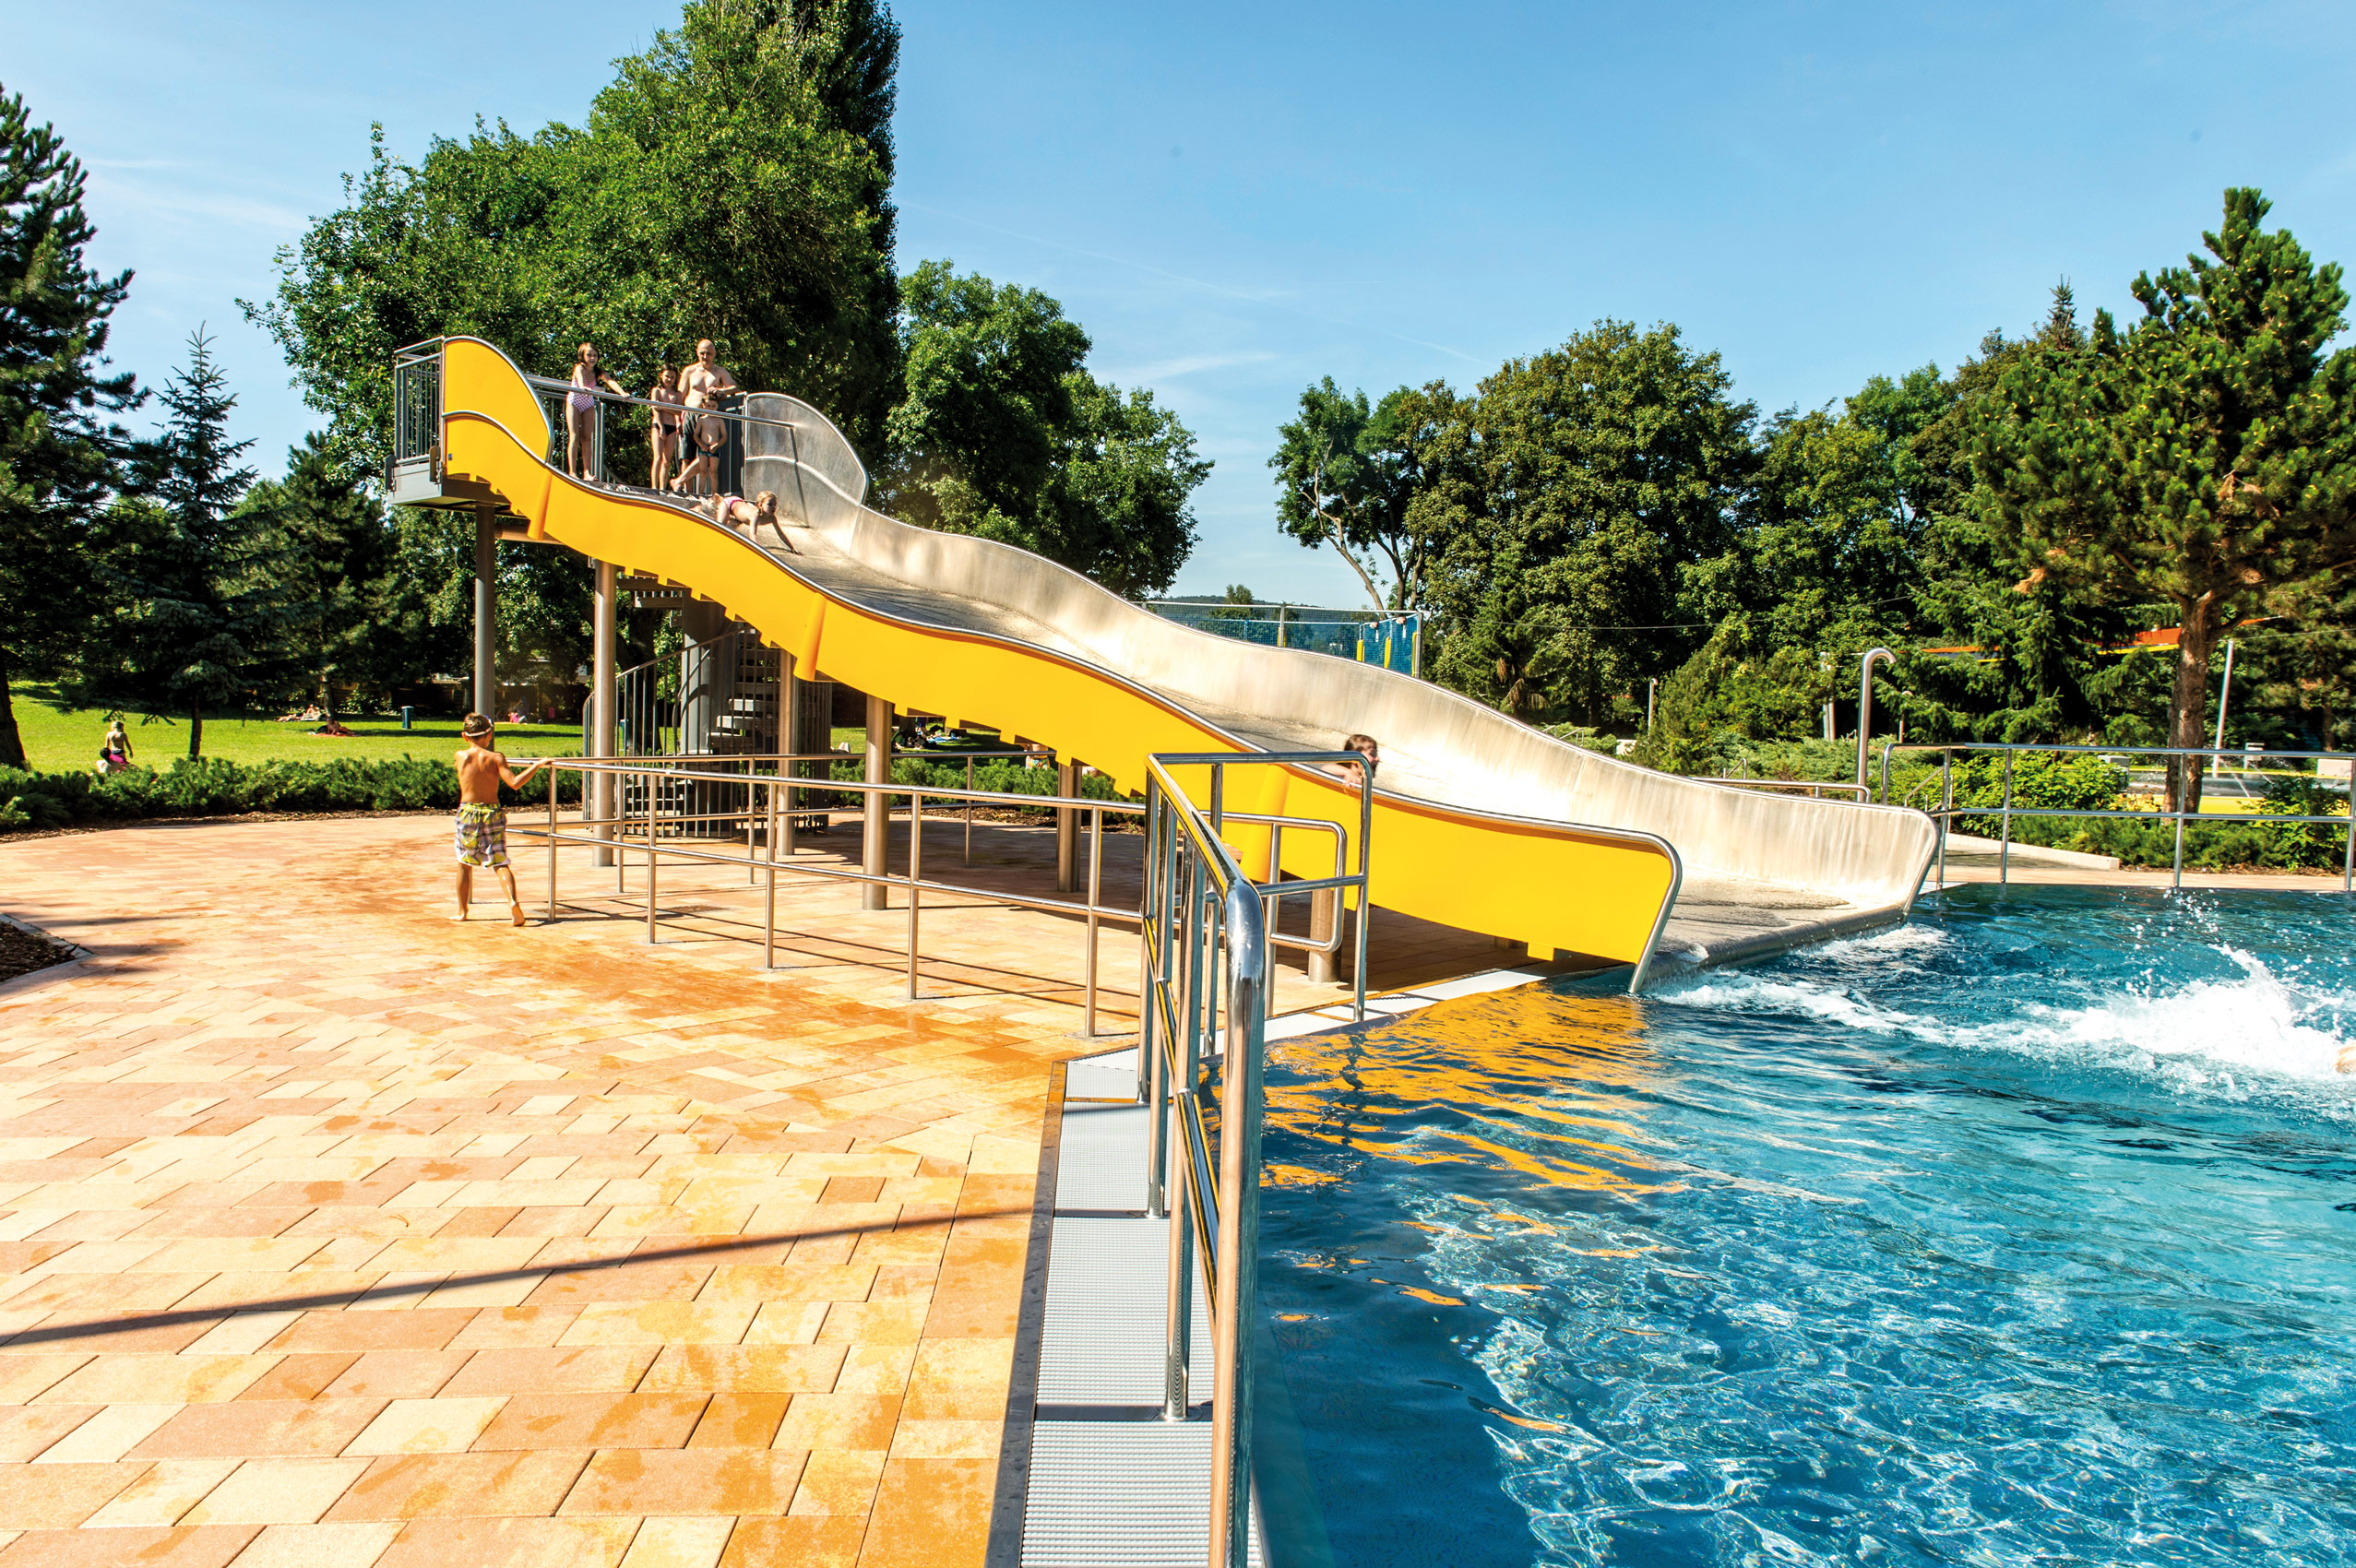 atlantics stainless steel slides open air swimming pool jena thueringen wide waves 127461